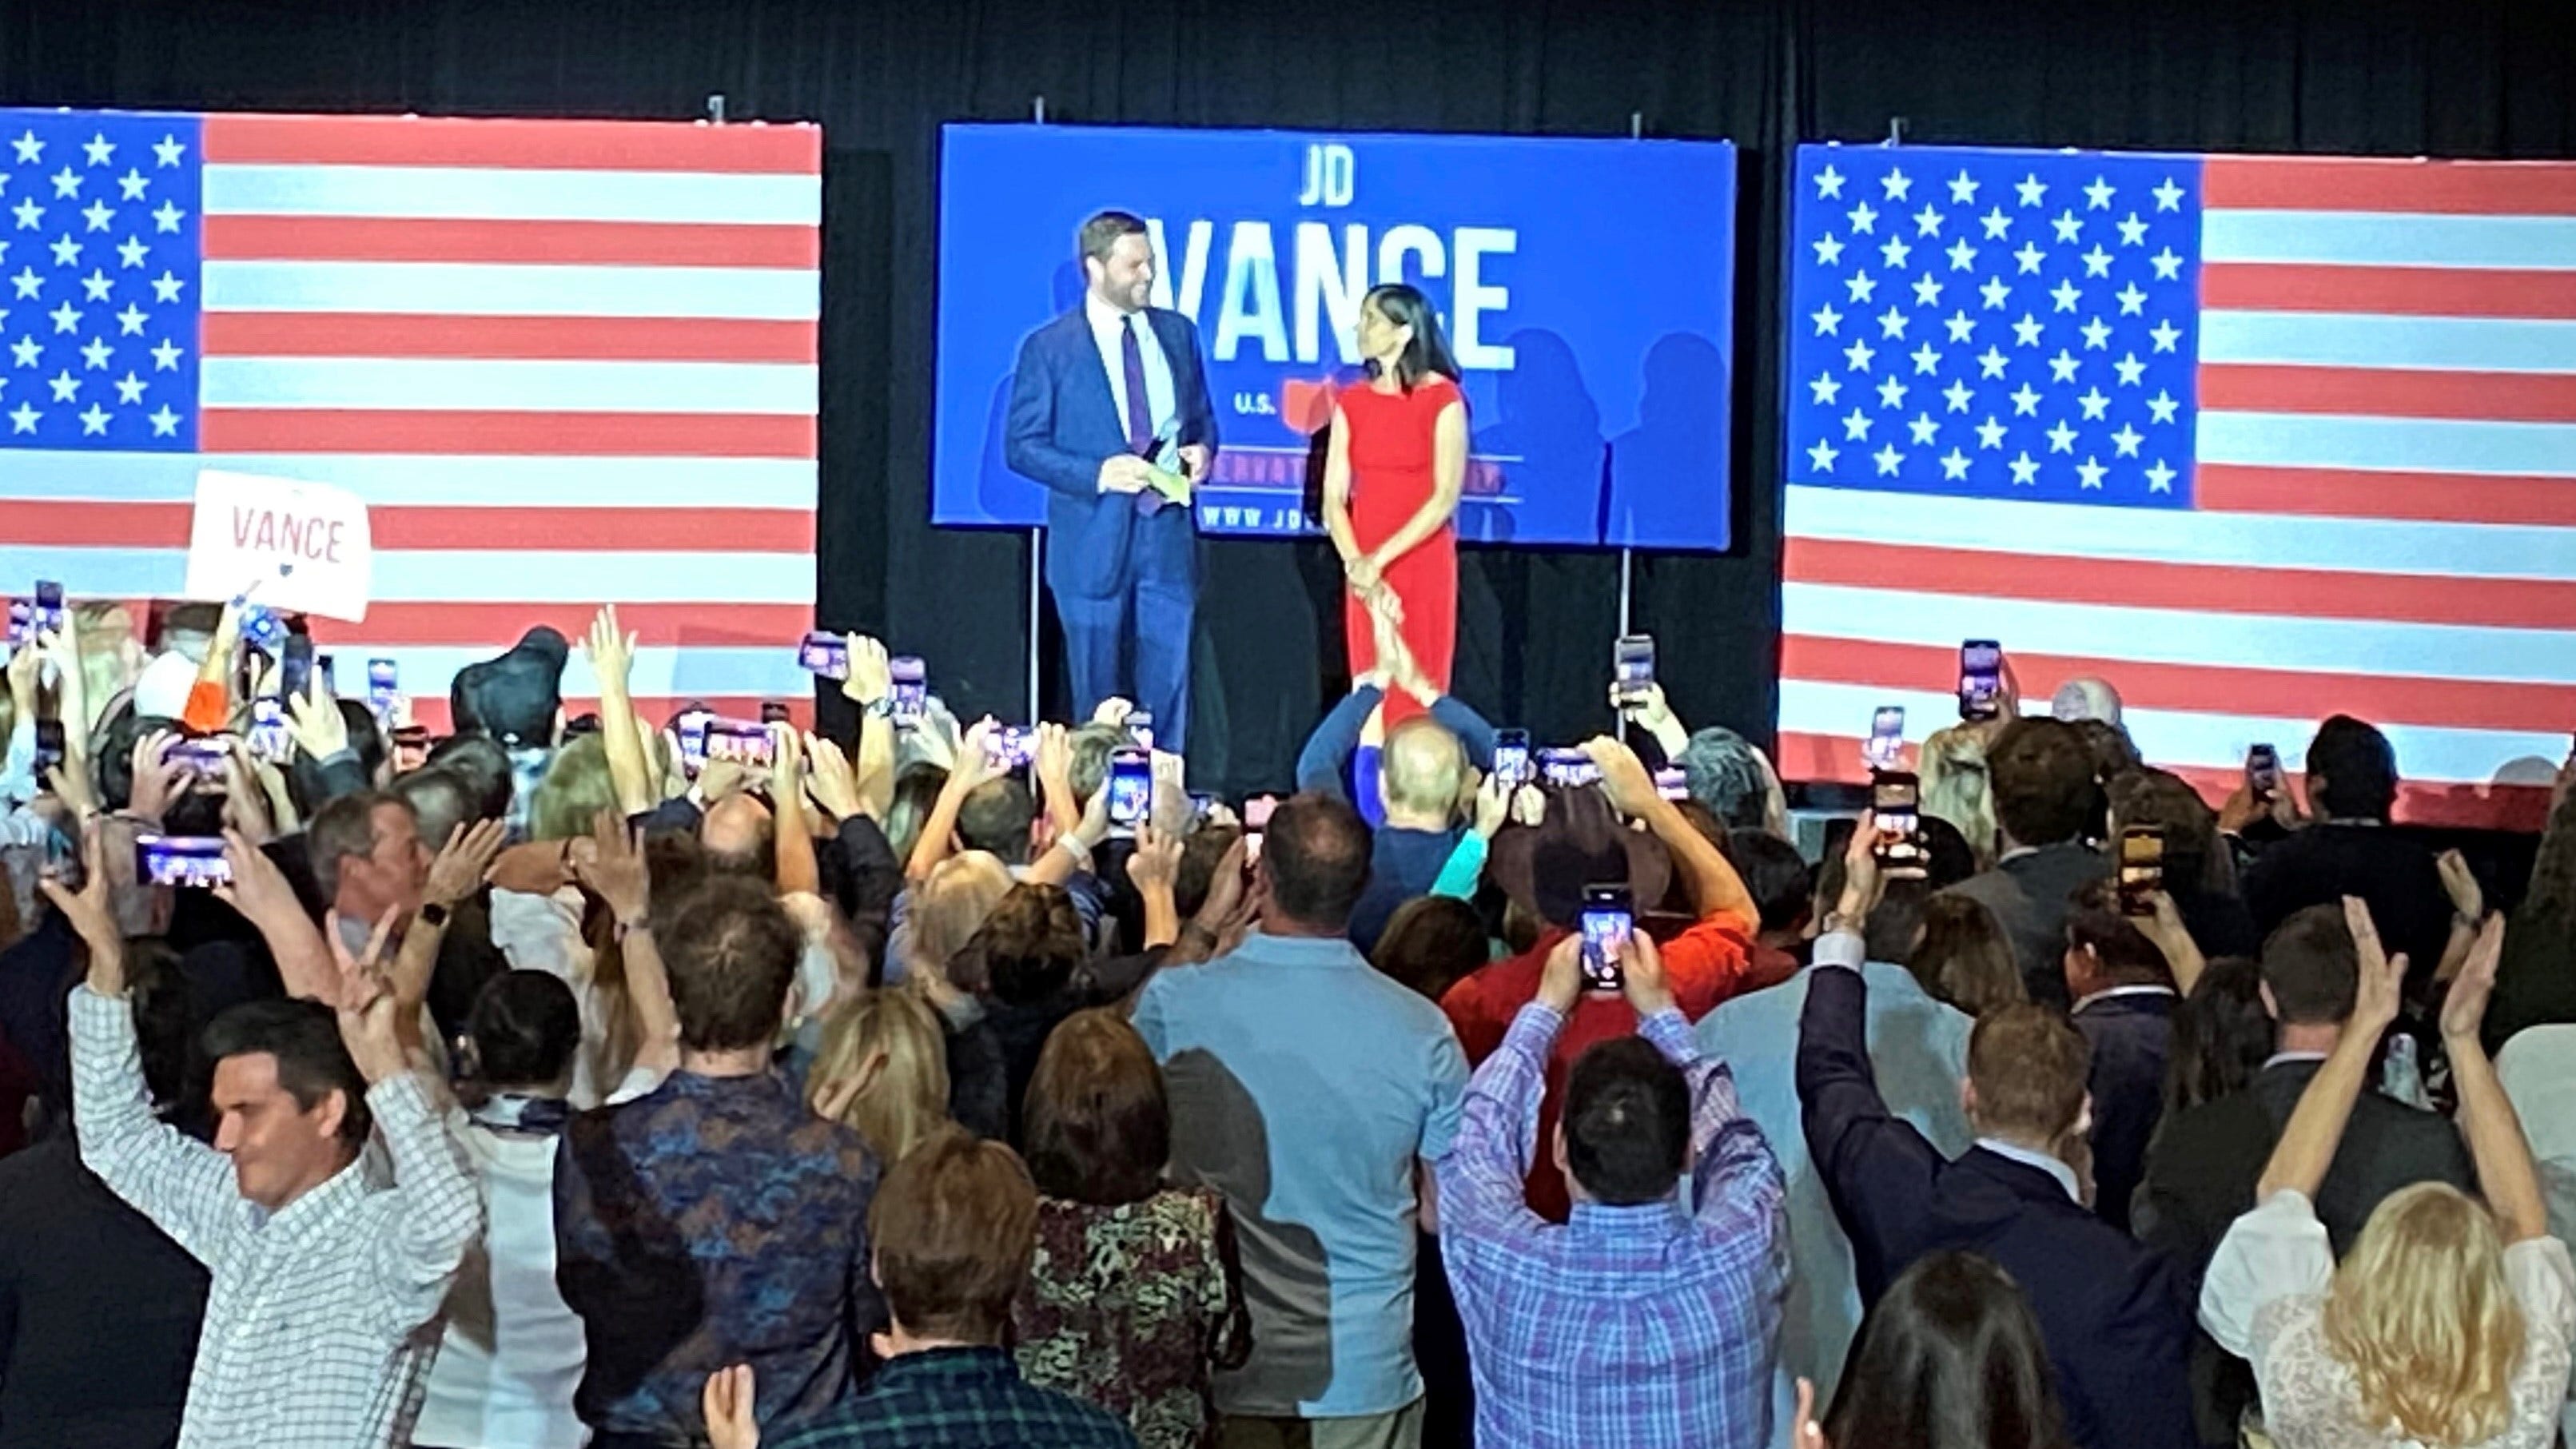 Trump-backed JD Vance wins tumultuous Senate GOP primary showdown in Ohio